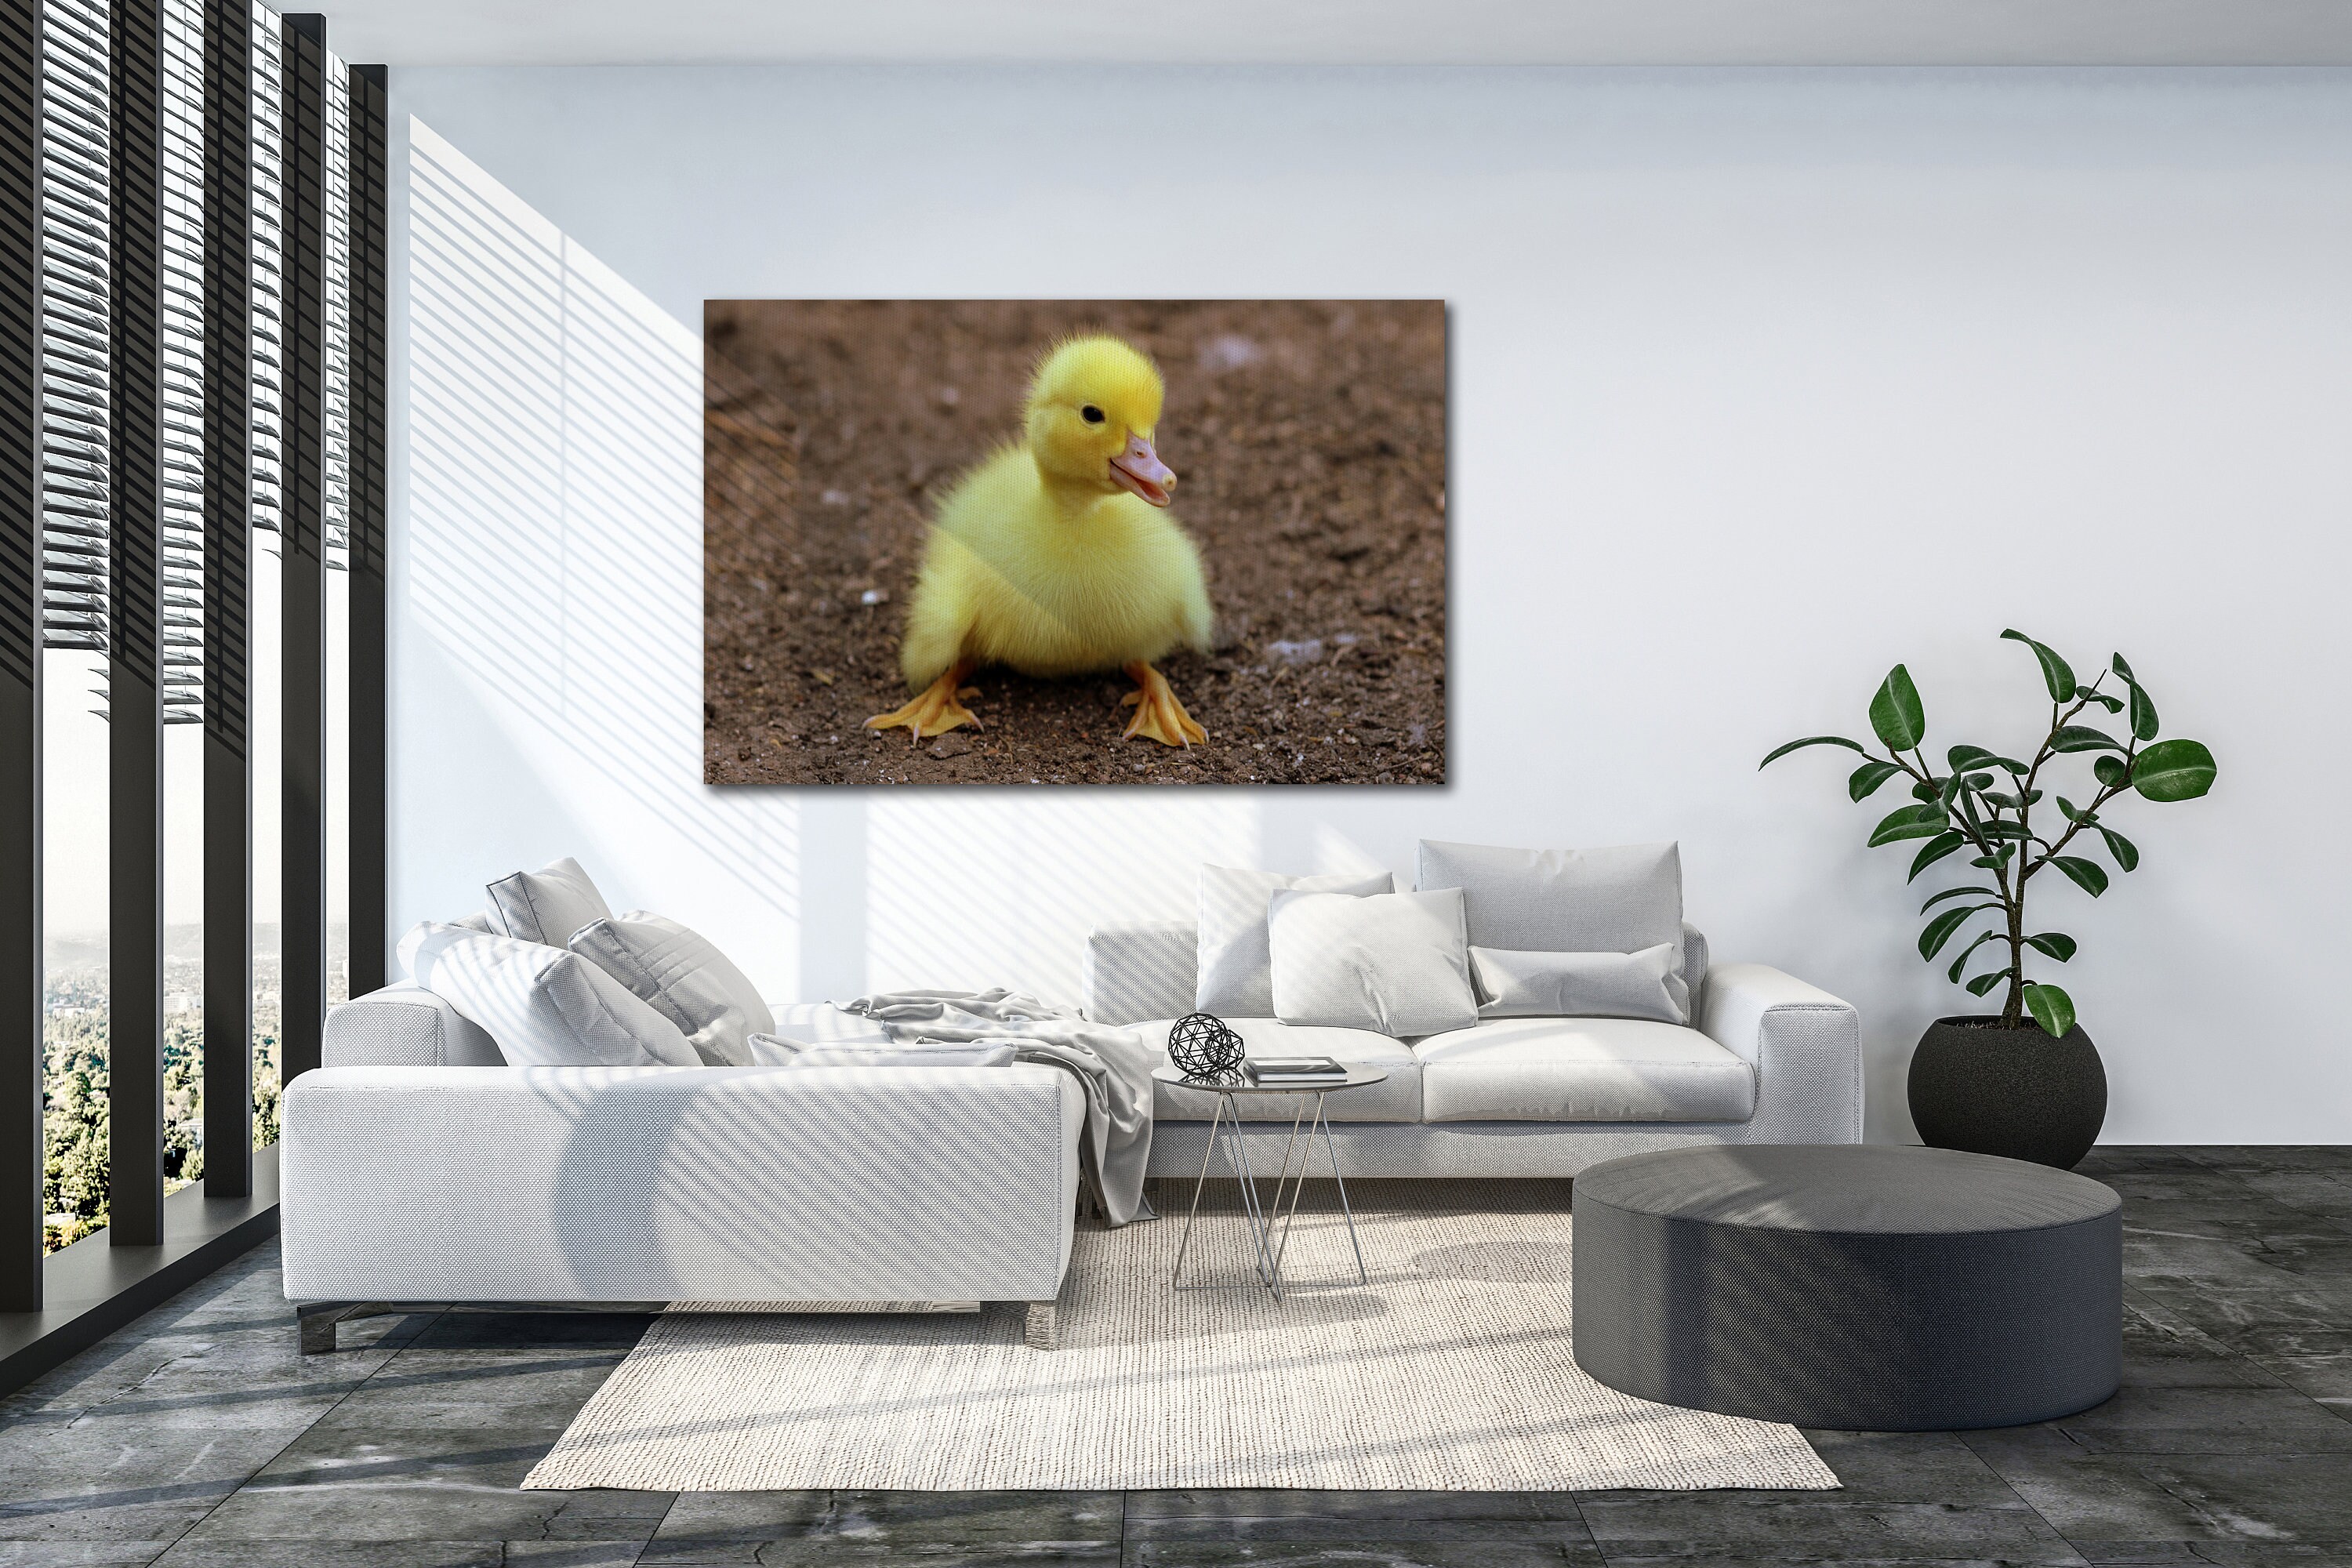 Cute Chick Canvas Wall Art Premium Canvas High Quality Wall | Etsy